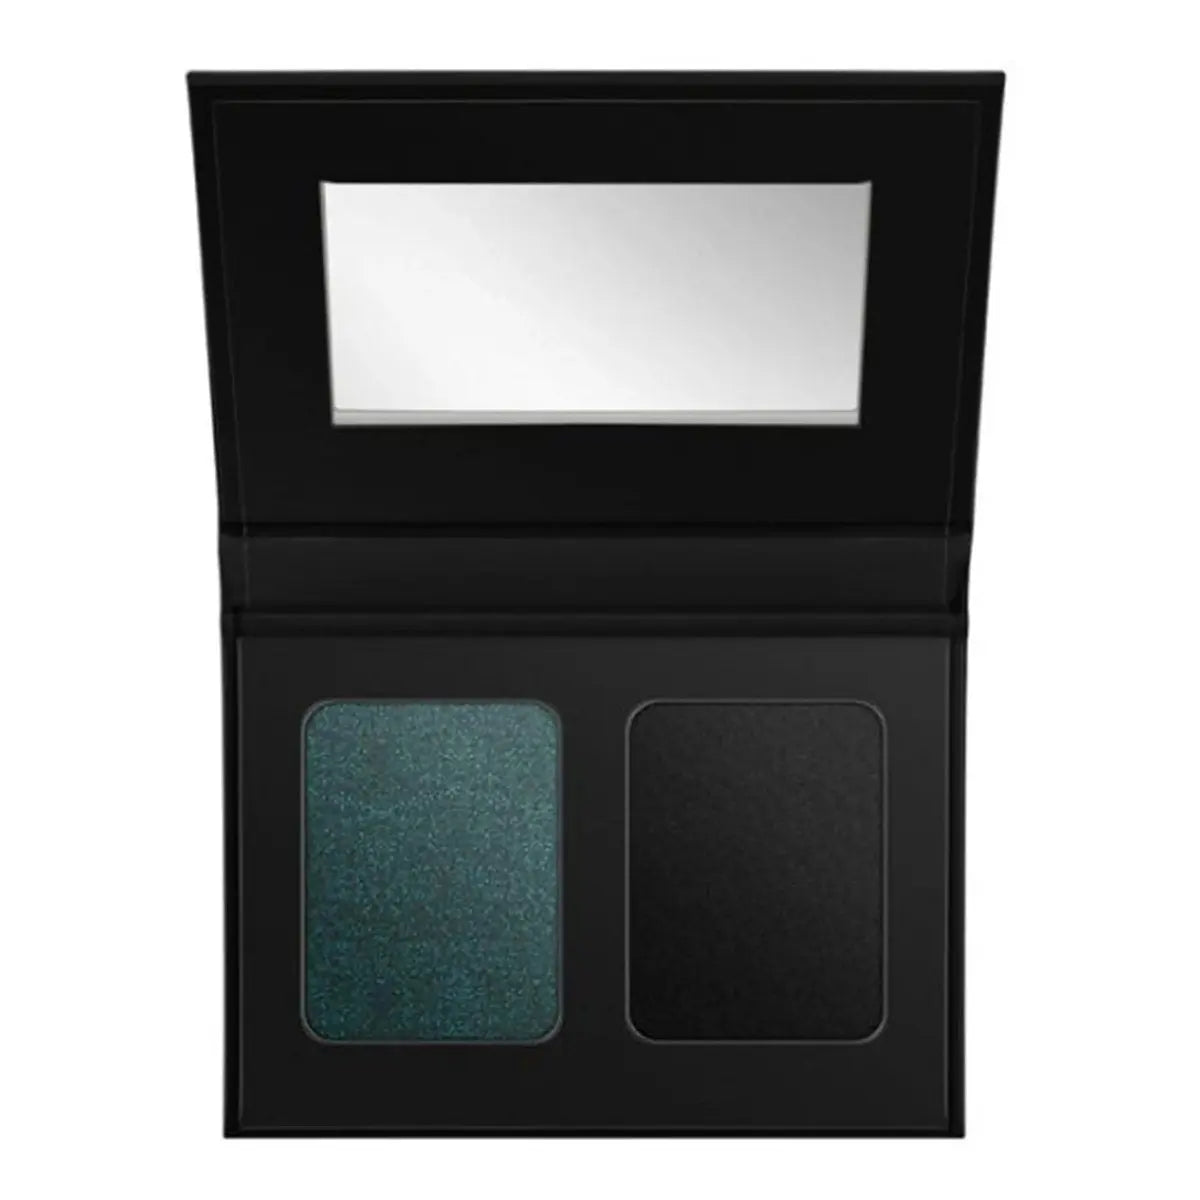 Image of L'Oreal X Isabelle Marant Smoke Eyeshadow Palette